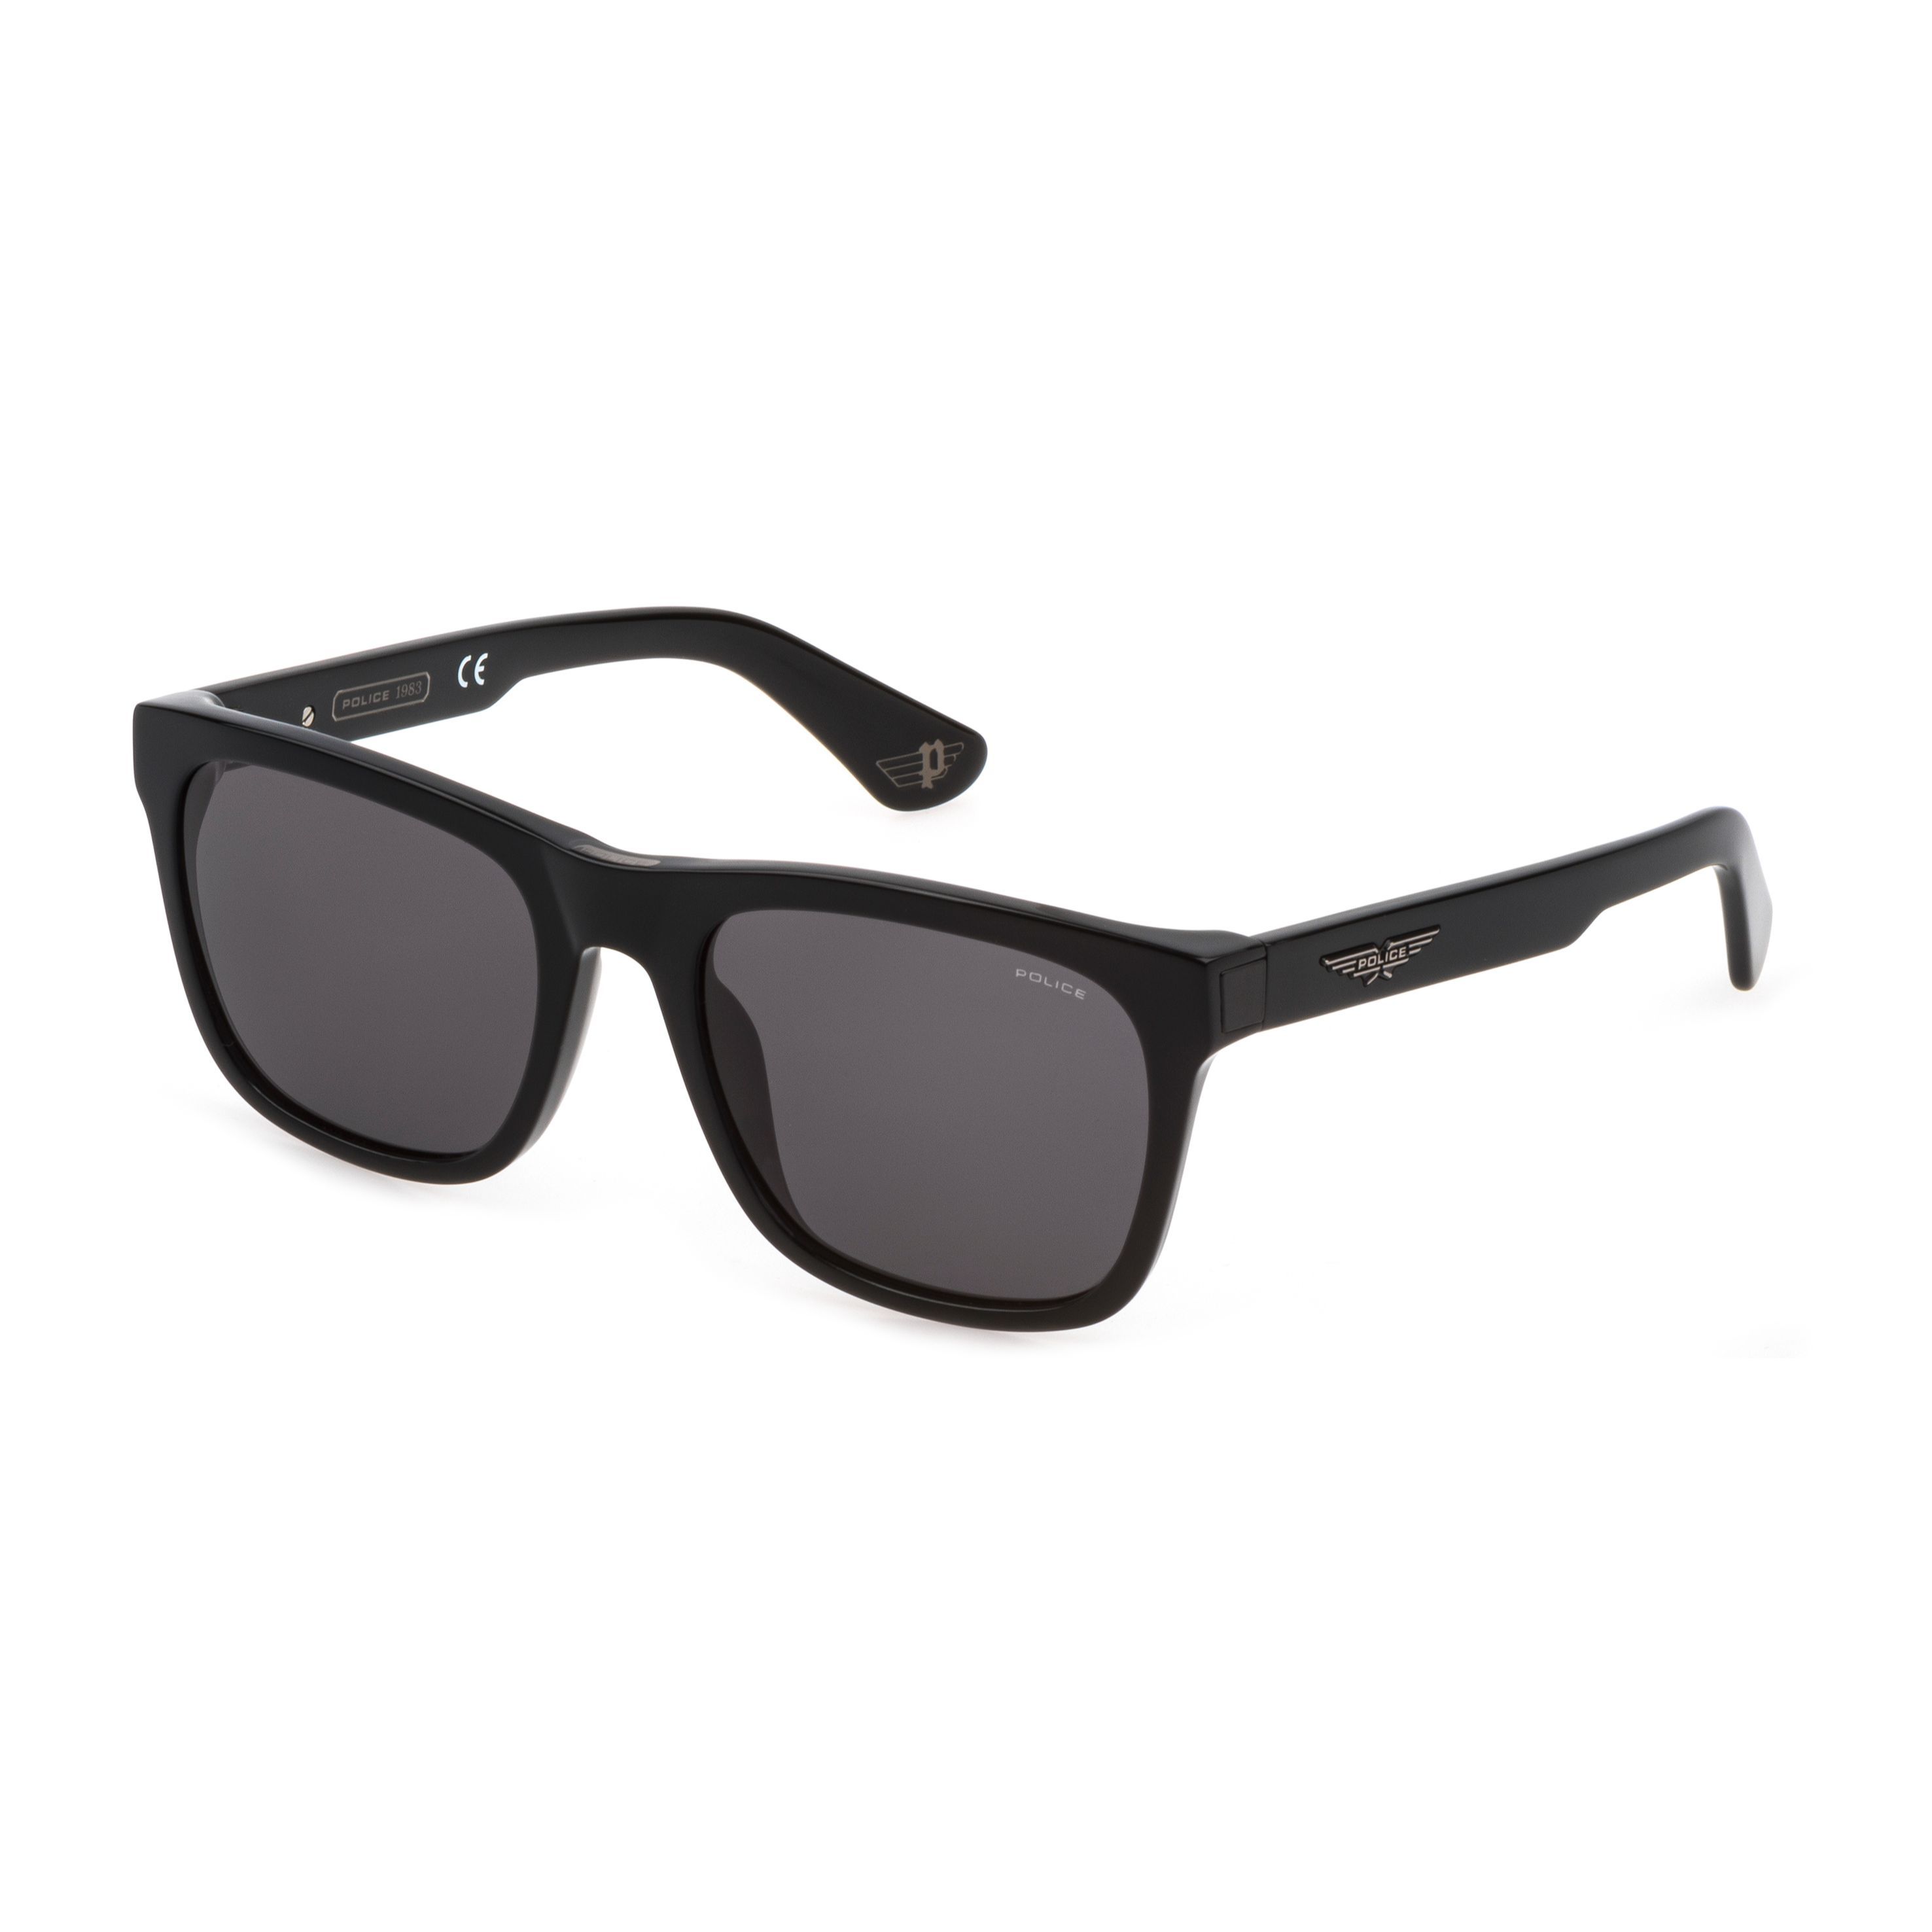 SPLE37M Square Sunglasses 700Y - size 56